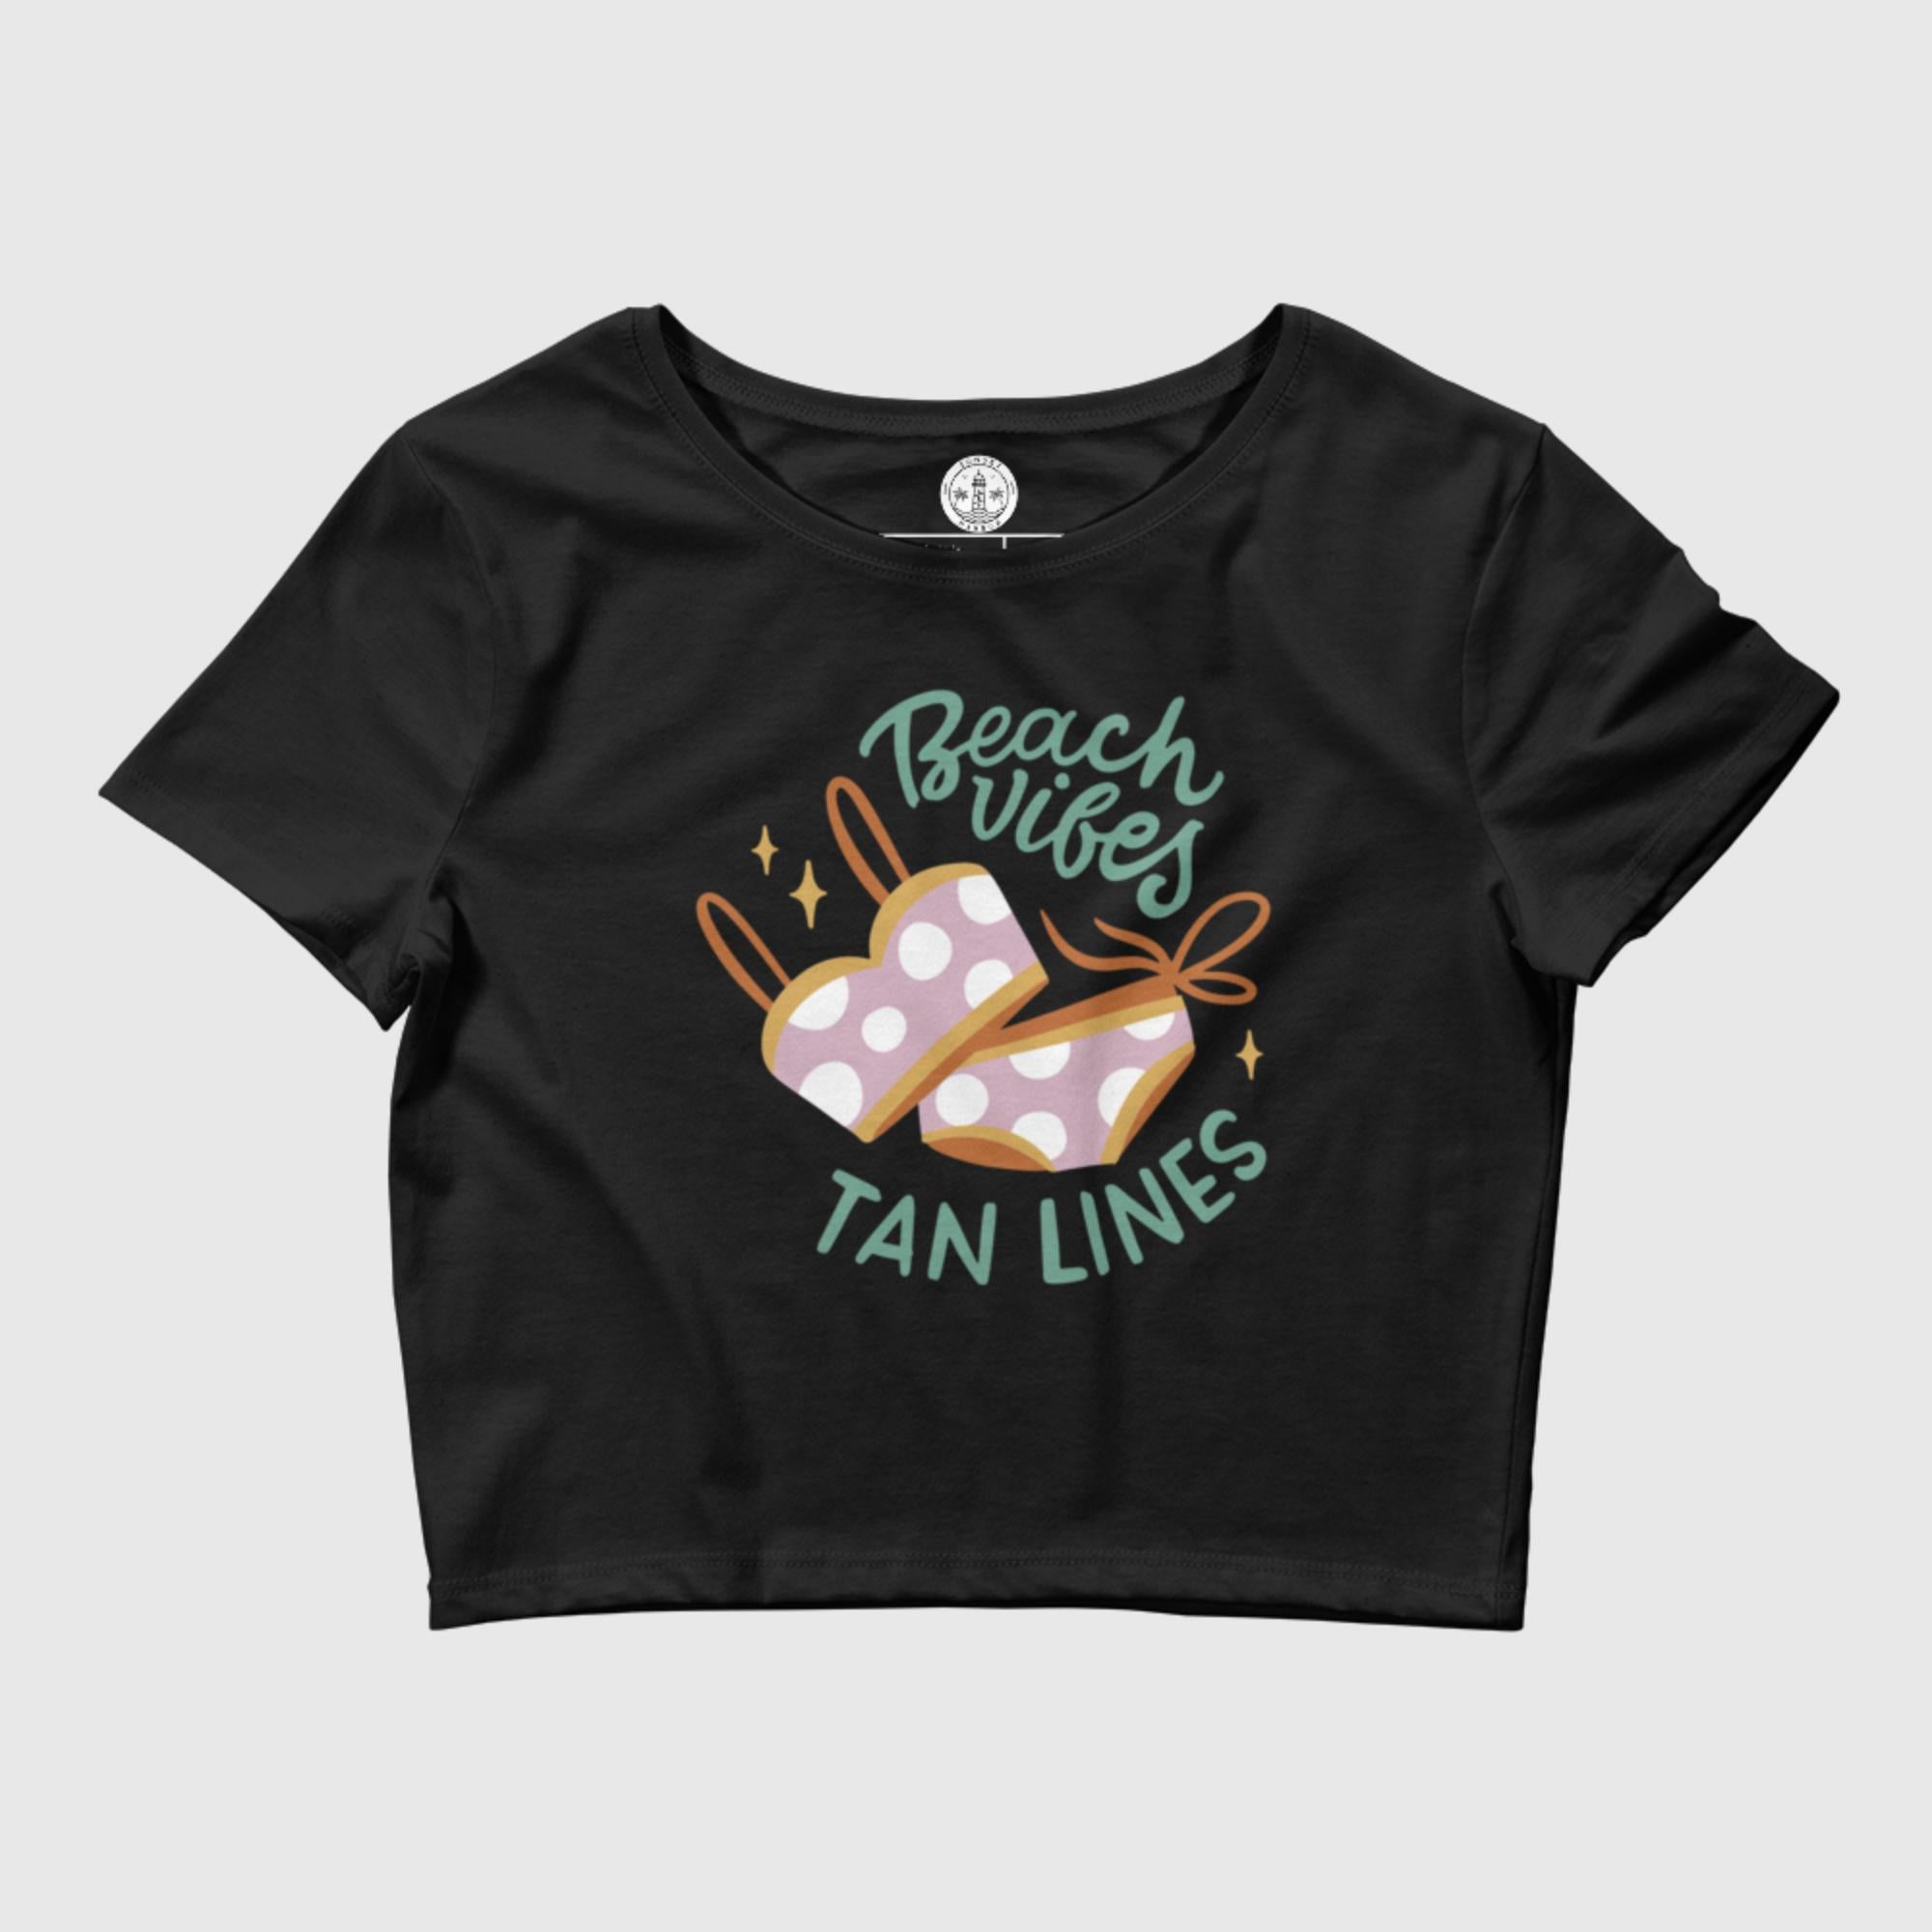 Camiseta corta para mujer - Beach Vibes, Tan Lines